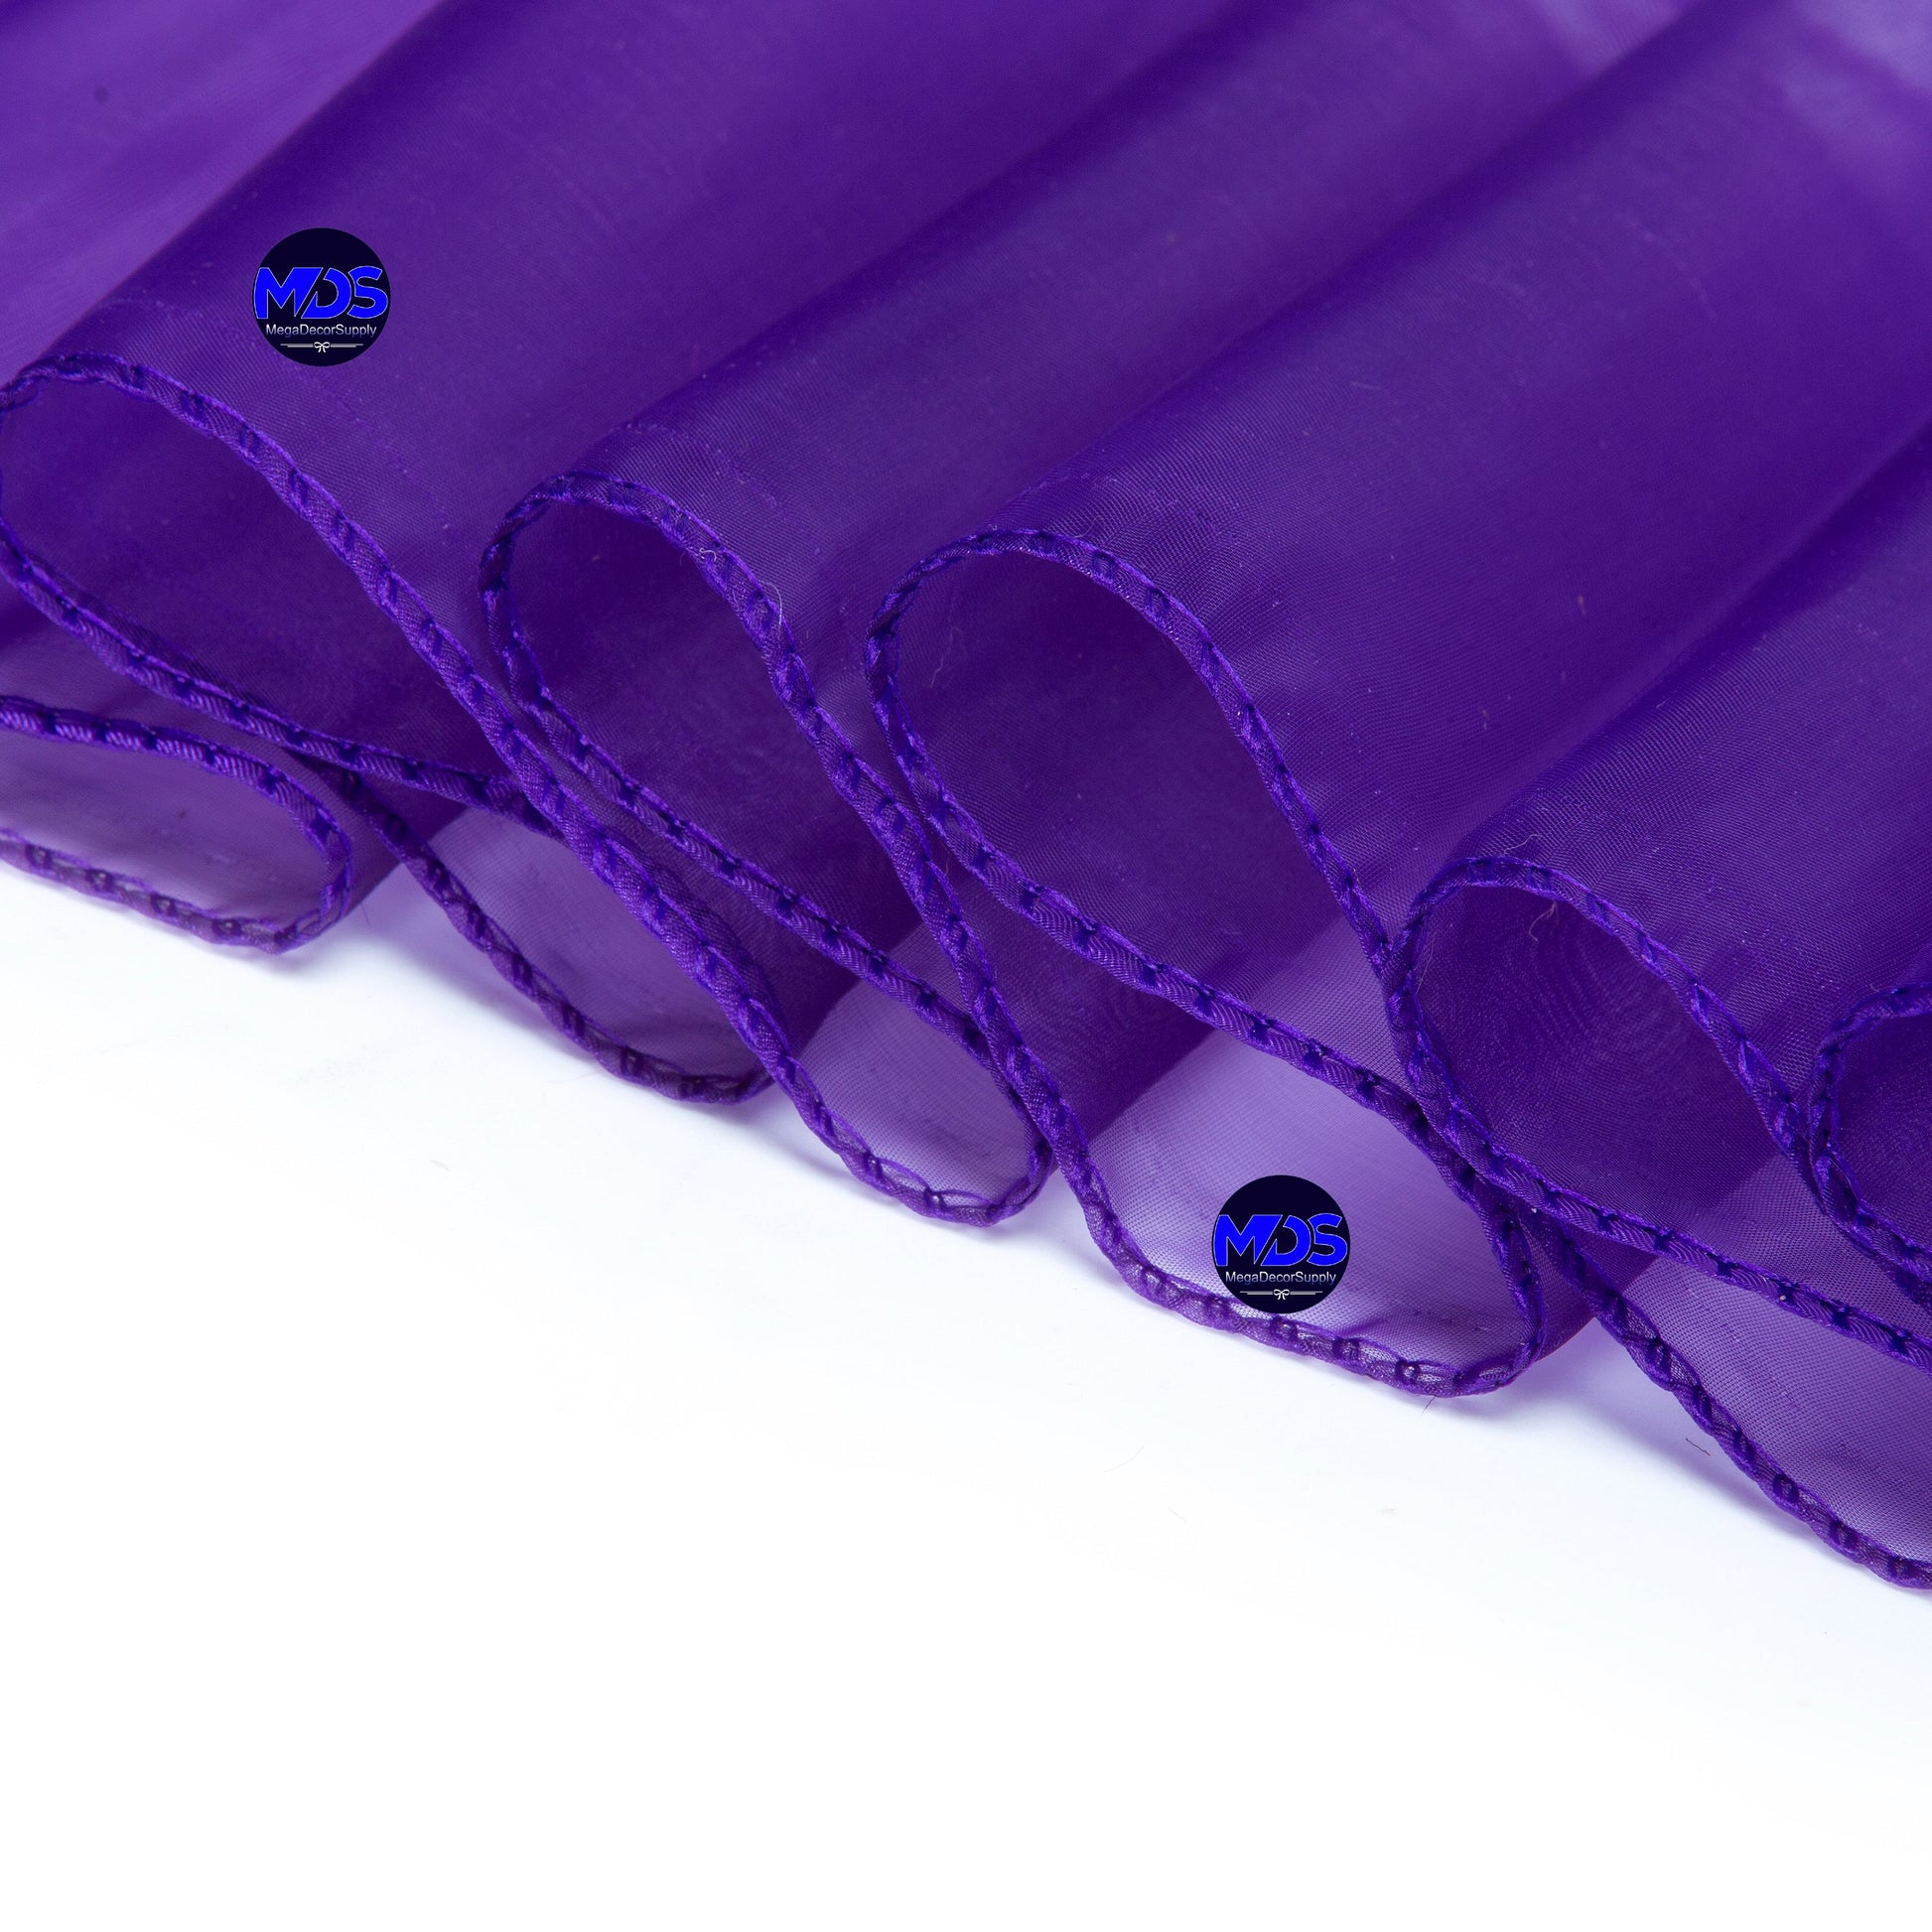 Cadbury Purple,2f1e11b3-578d-478b-8a2a-6eeaeed27f01